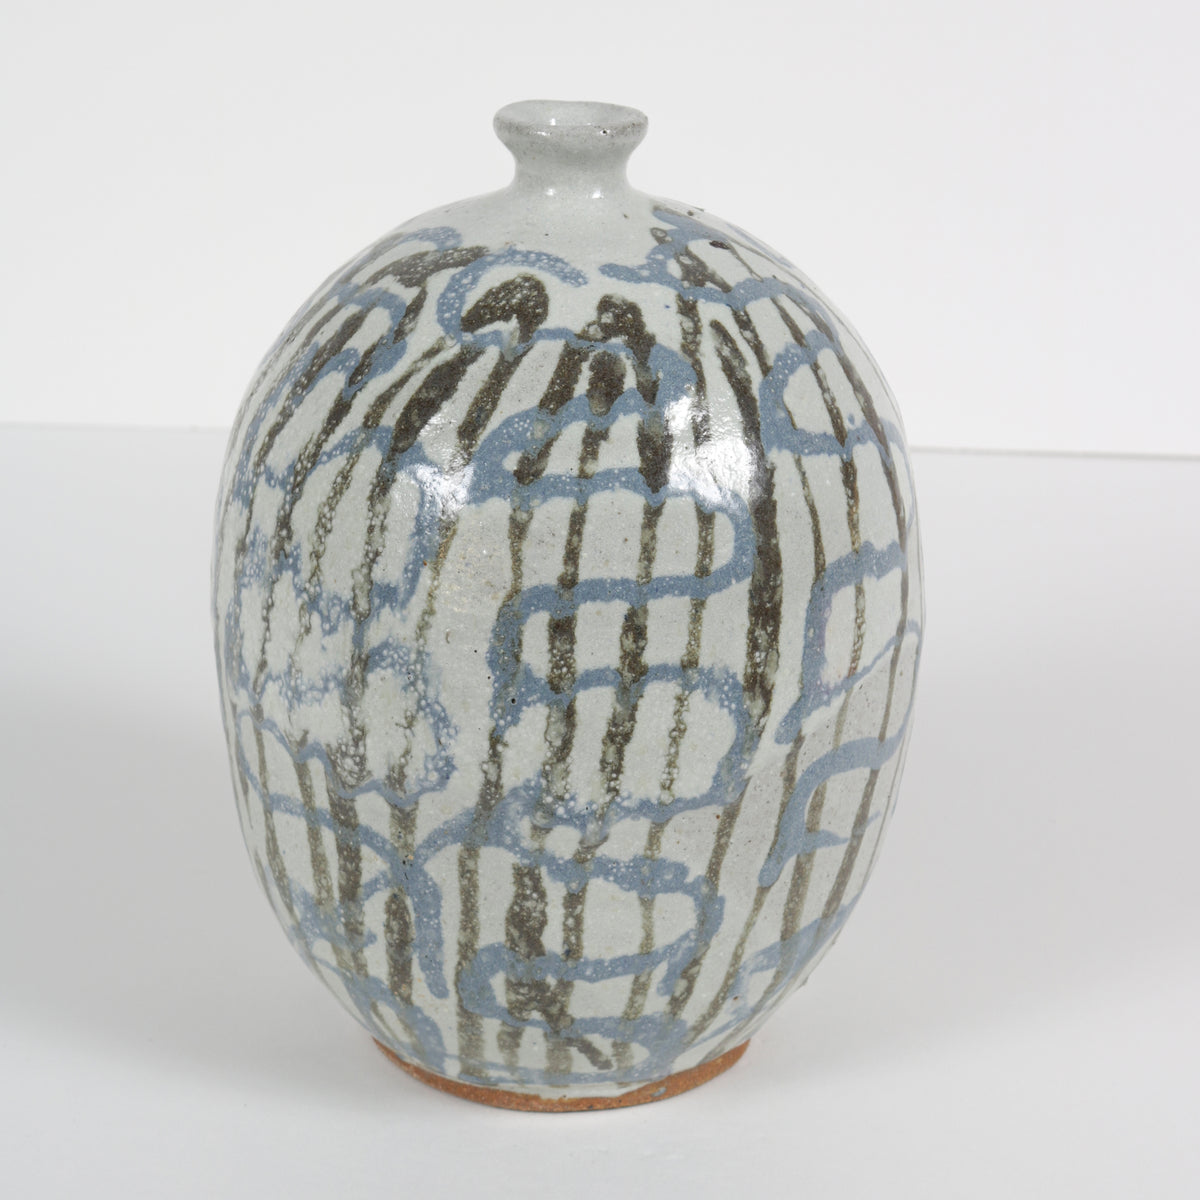 1970s Handmade Ceramic with Linear Swirl Pattern &lt;br&gt;&lt;br&gt;#B5940